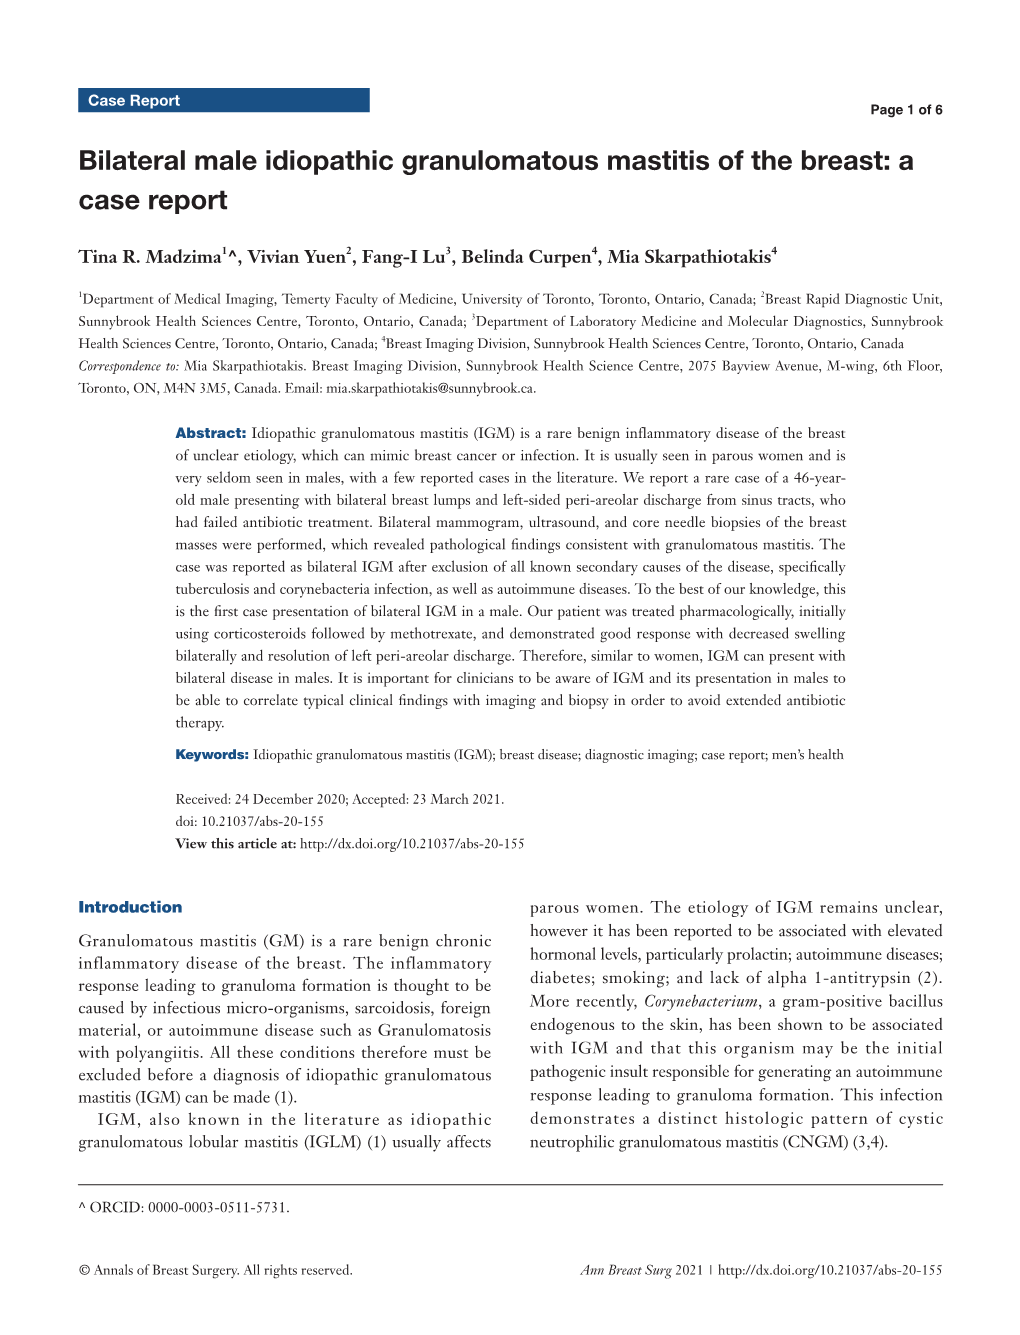 Bilateral Male Idiopathic Granulomatous Mastitis of the Breast: a Case Report